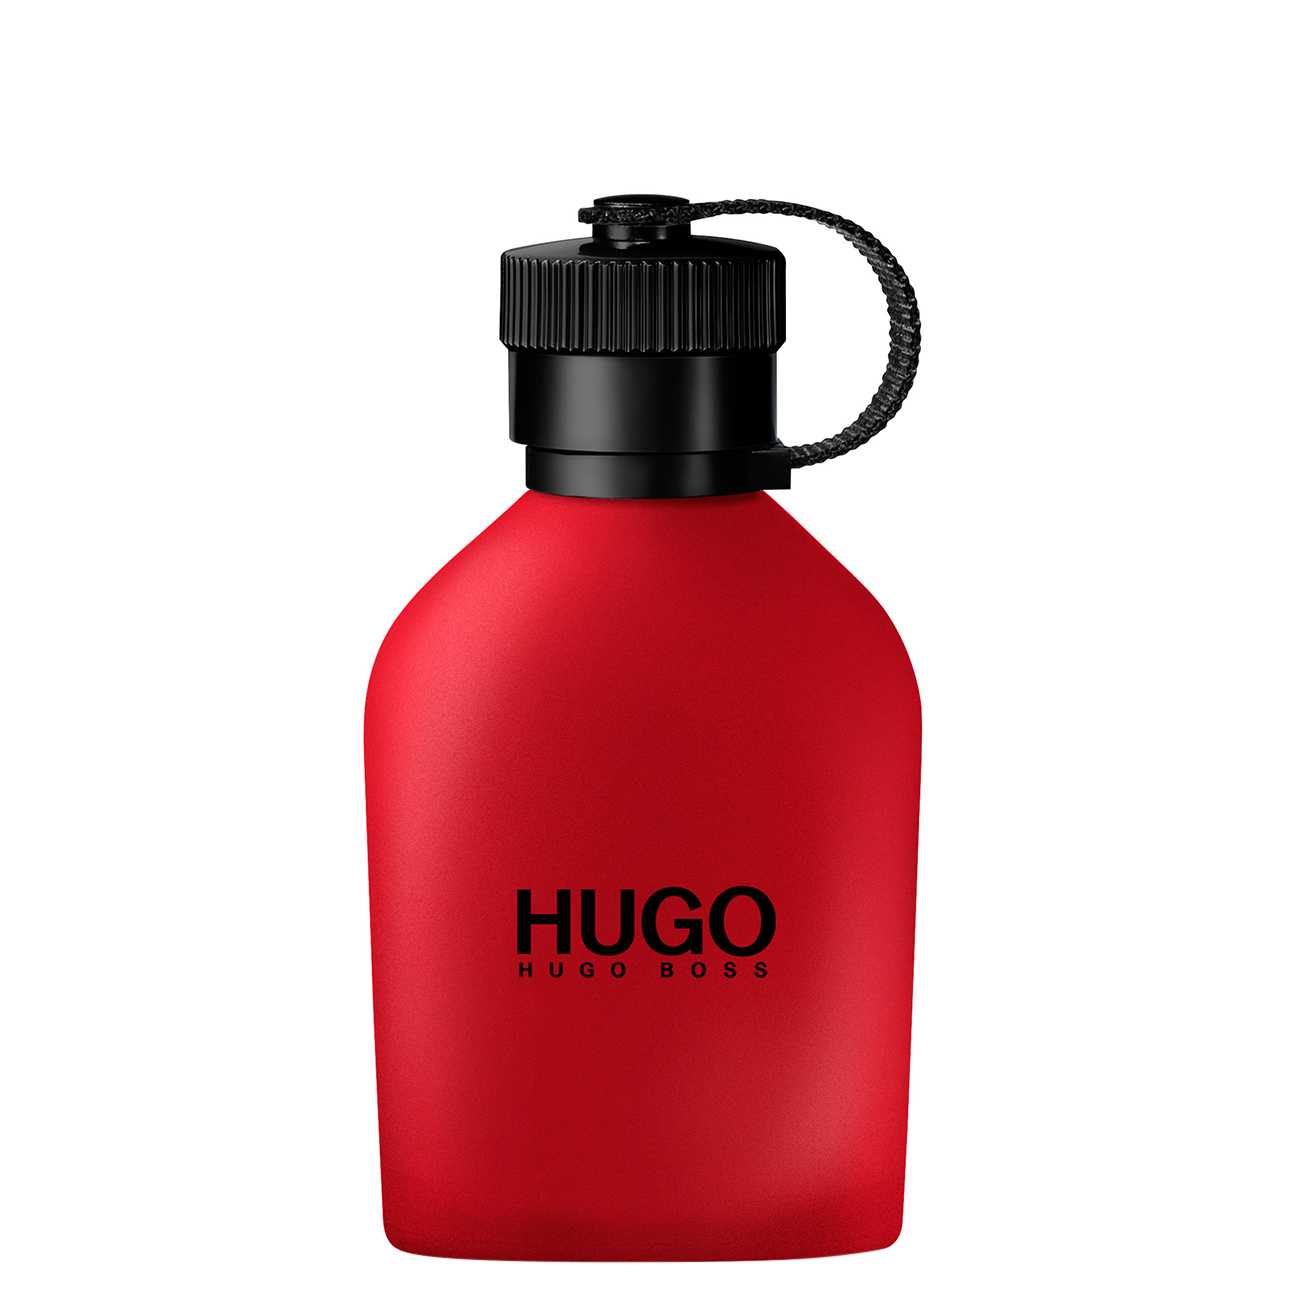 HUGO RED 75ml original Hugo Boss 75ml